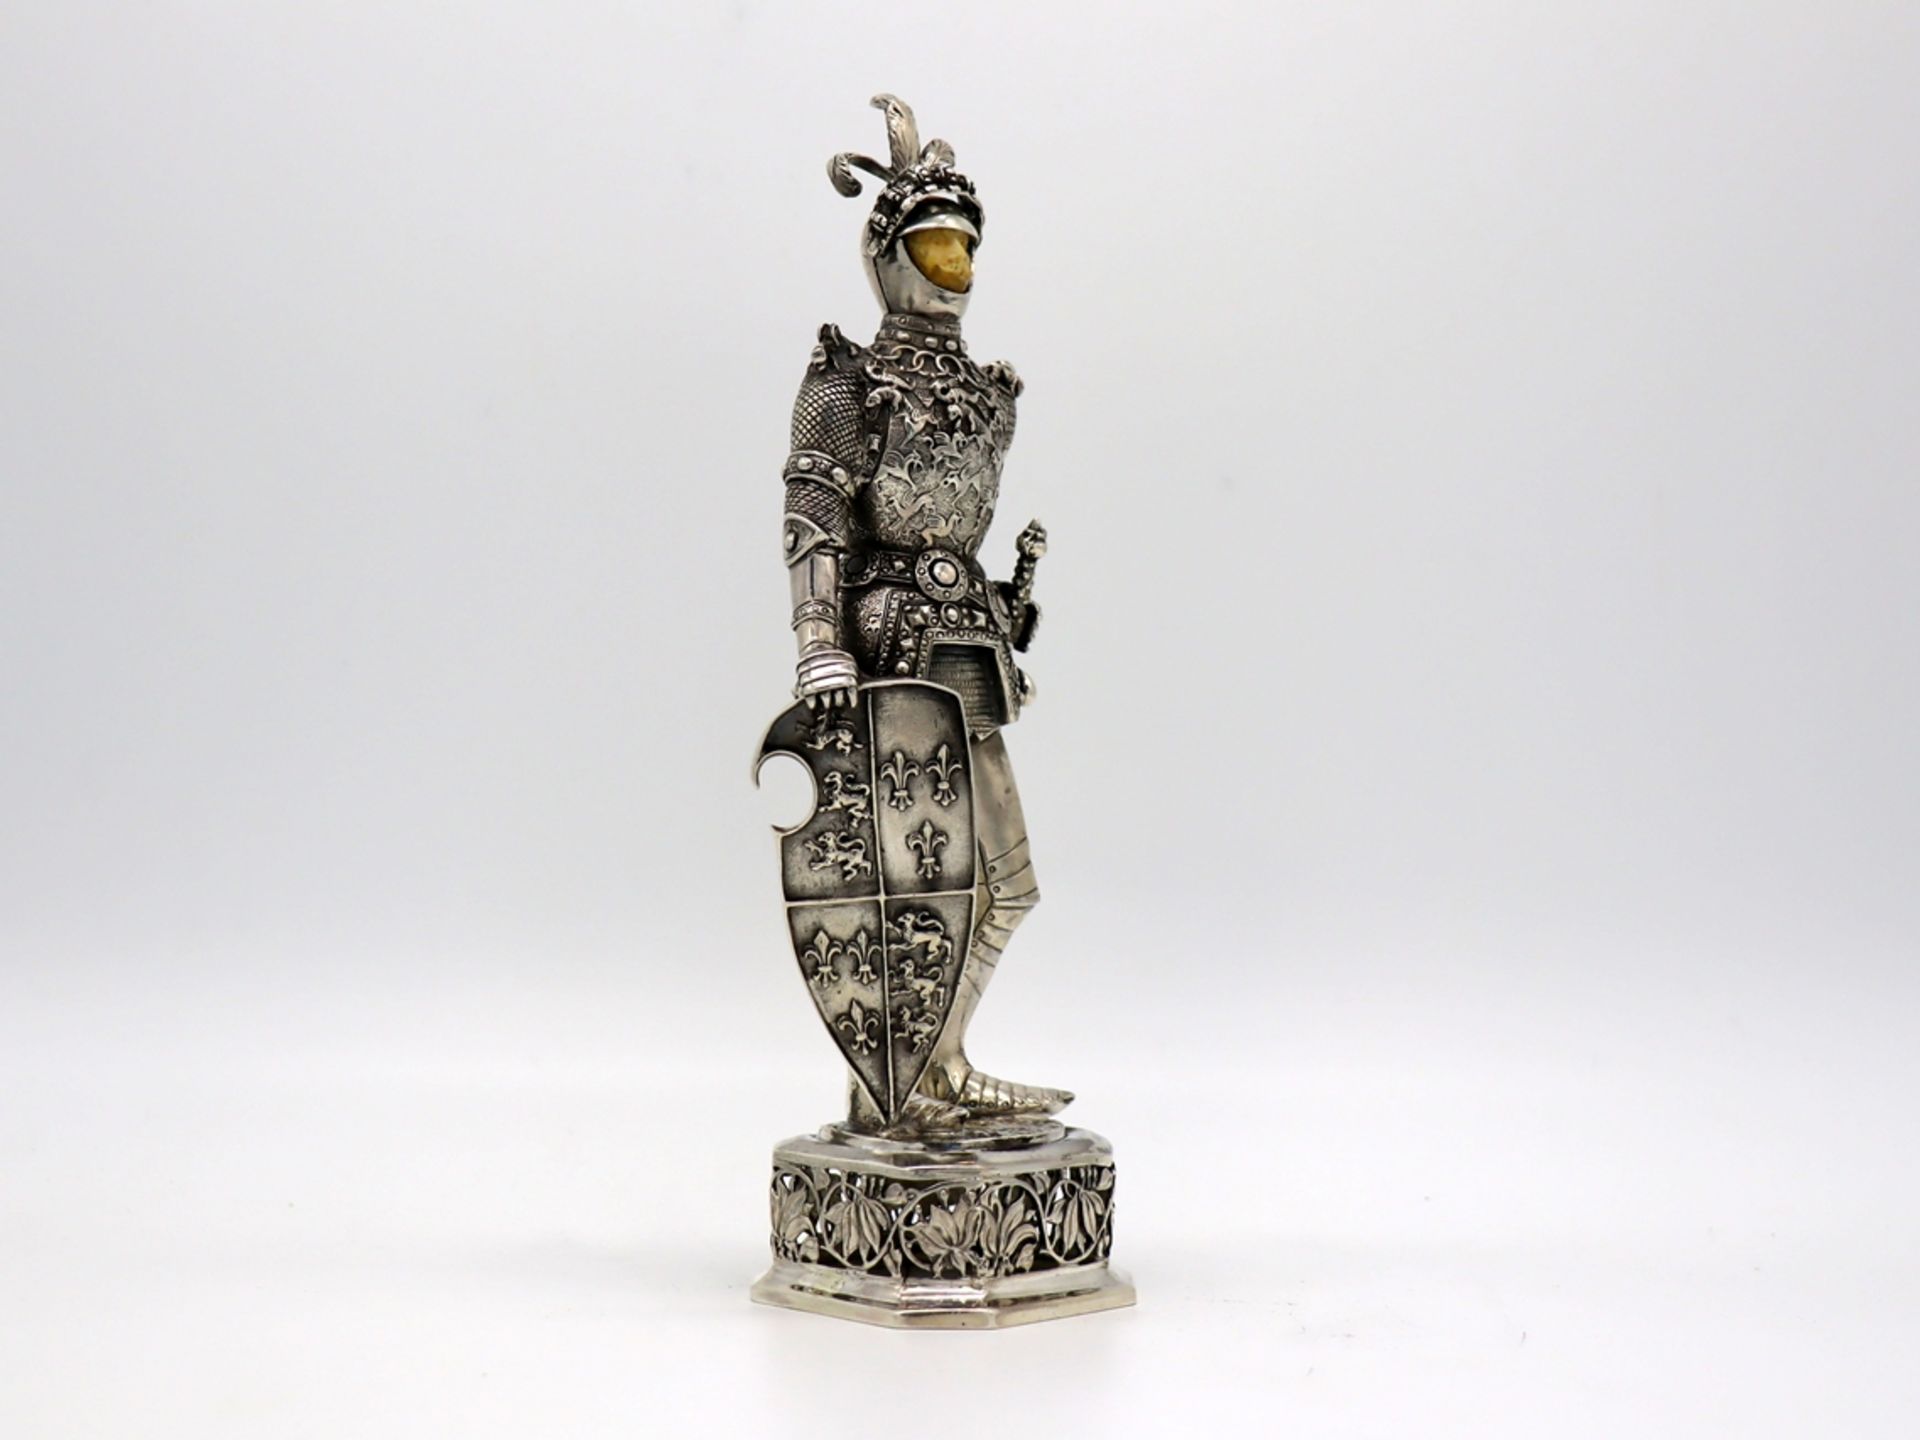 Knight figure in 800 silver, Jean-Louis Schlingloff (1907-1930) full-sculpture representation. - Image 5 of 9